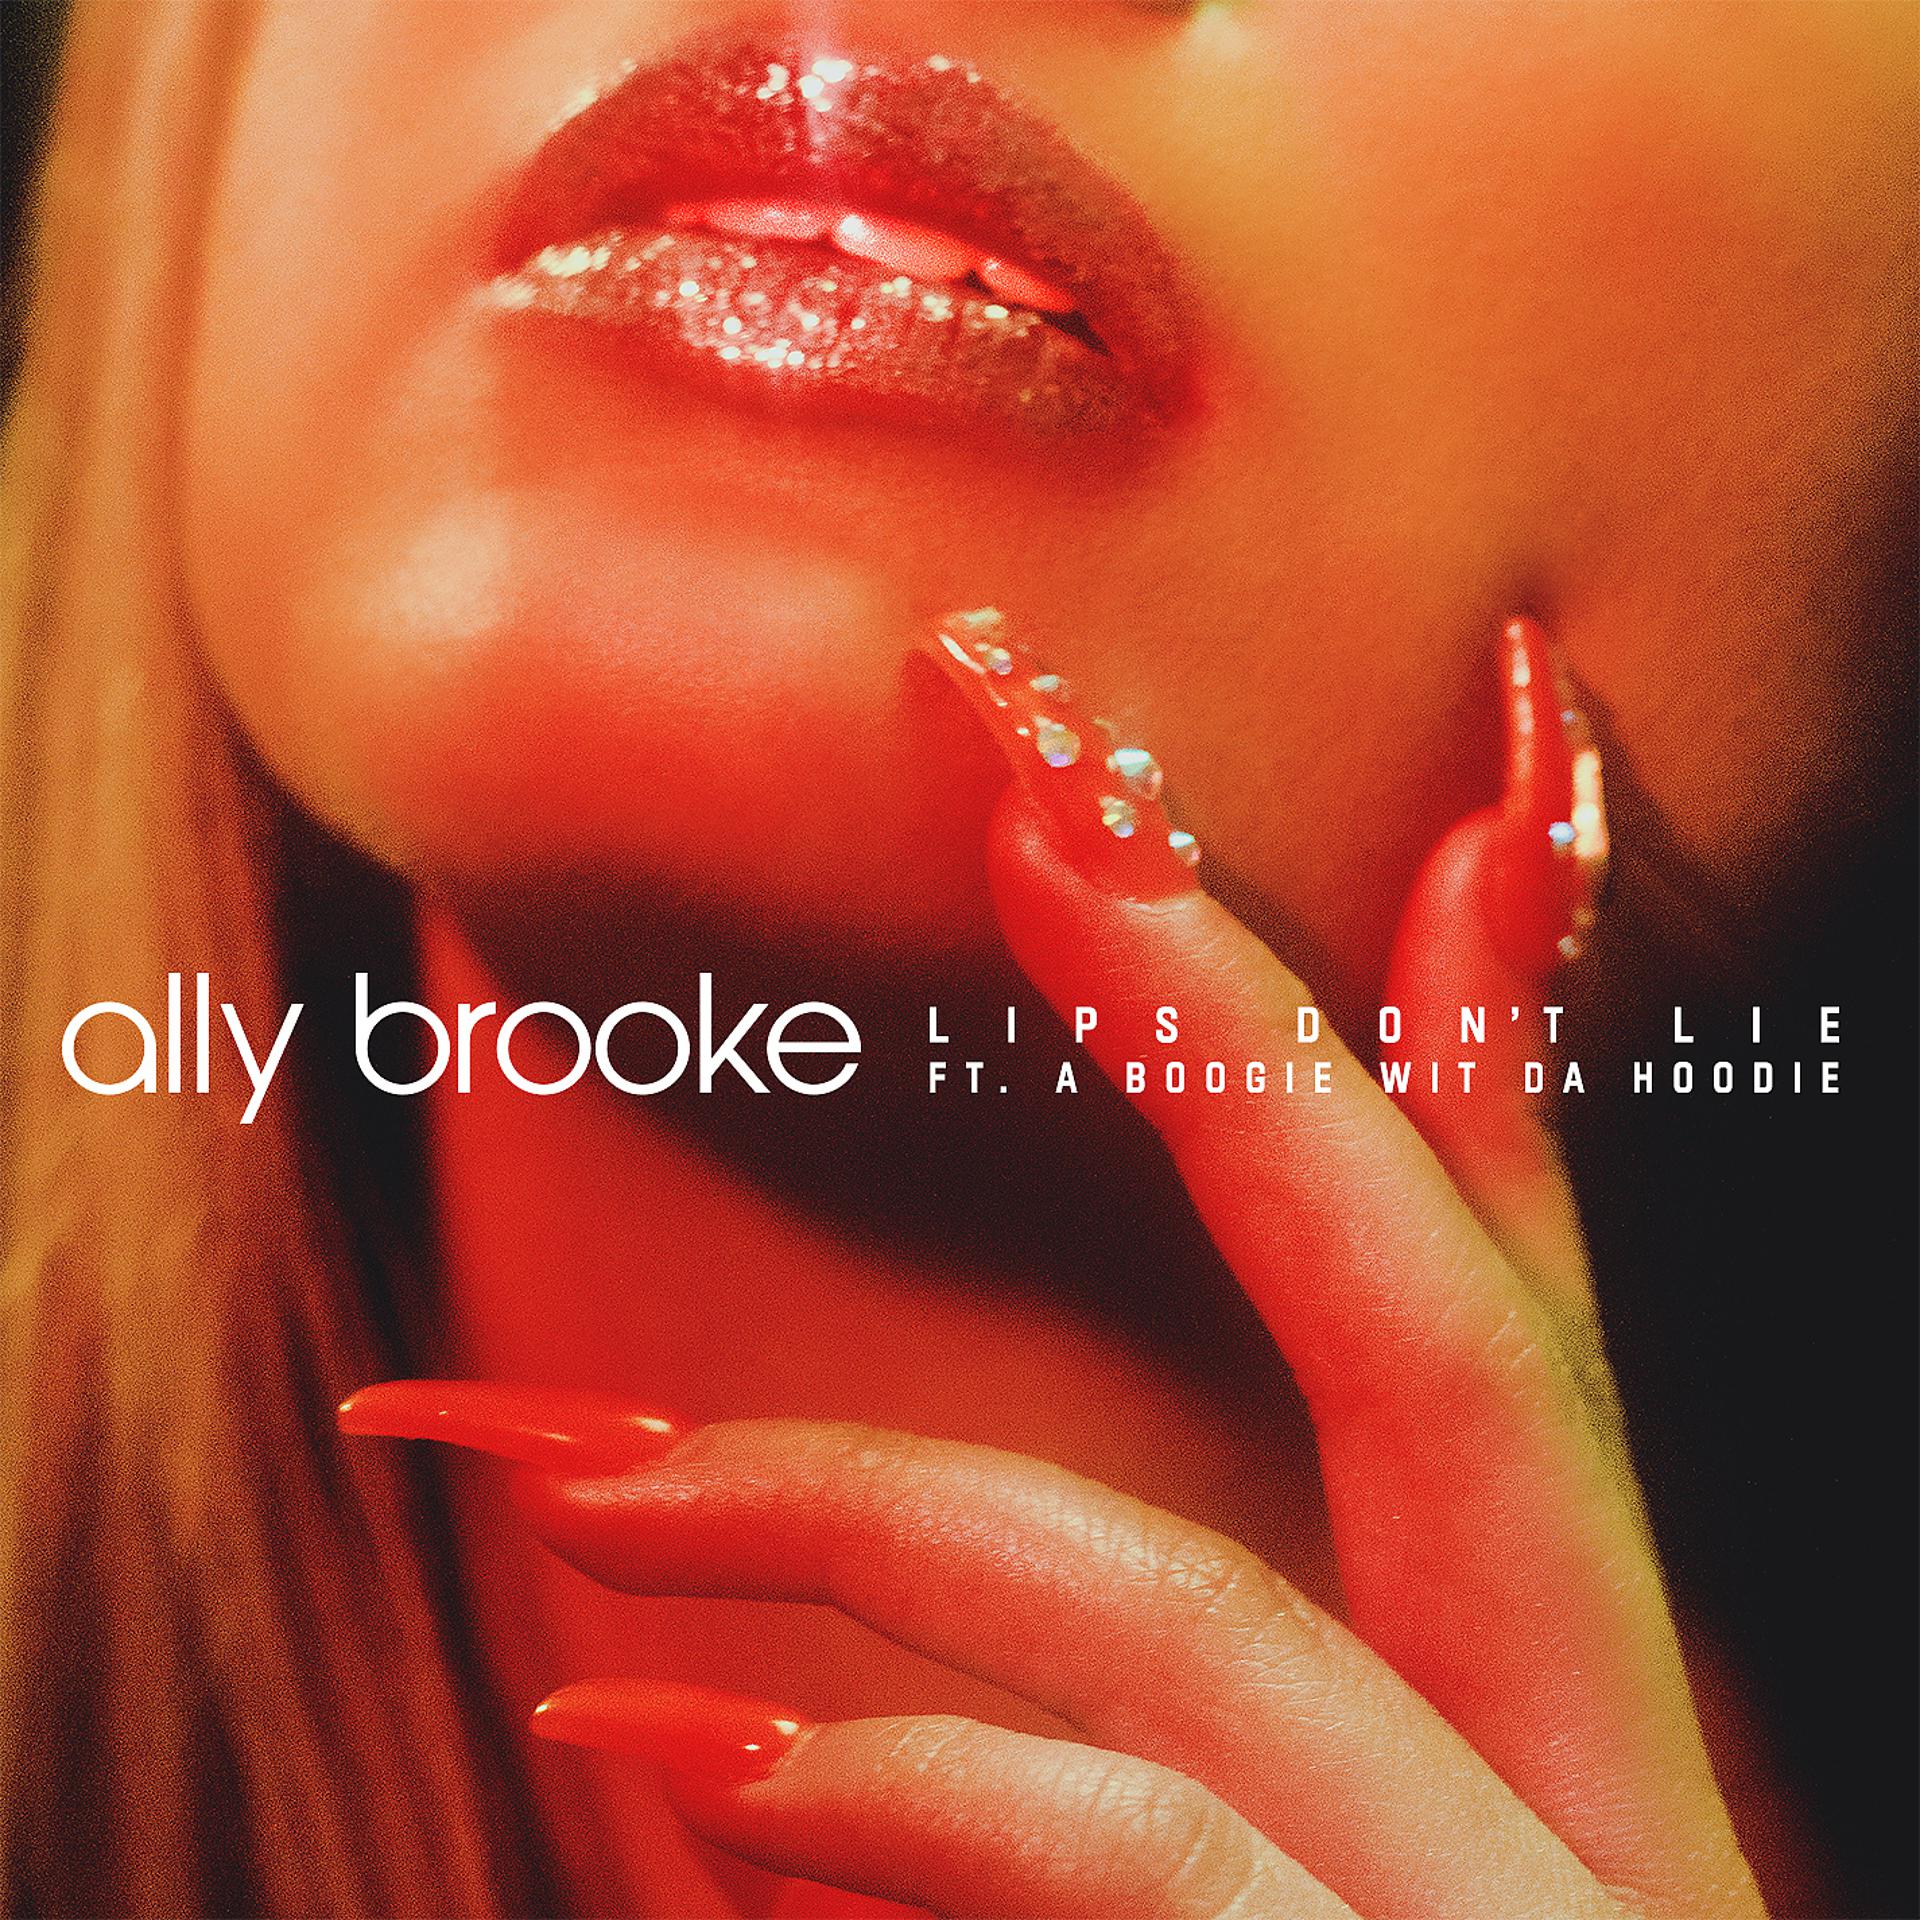 Постер к треку Ally Brooke, A Boogie Wit da Hoodie - Lips Don't Lie (feat. A Boogie Wit da Hoodie)